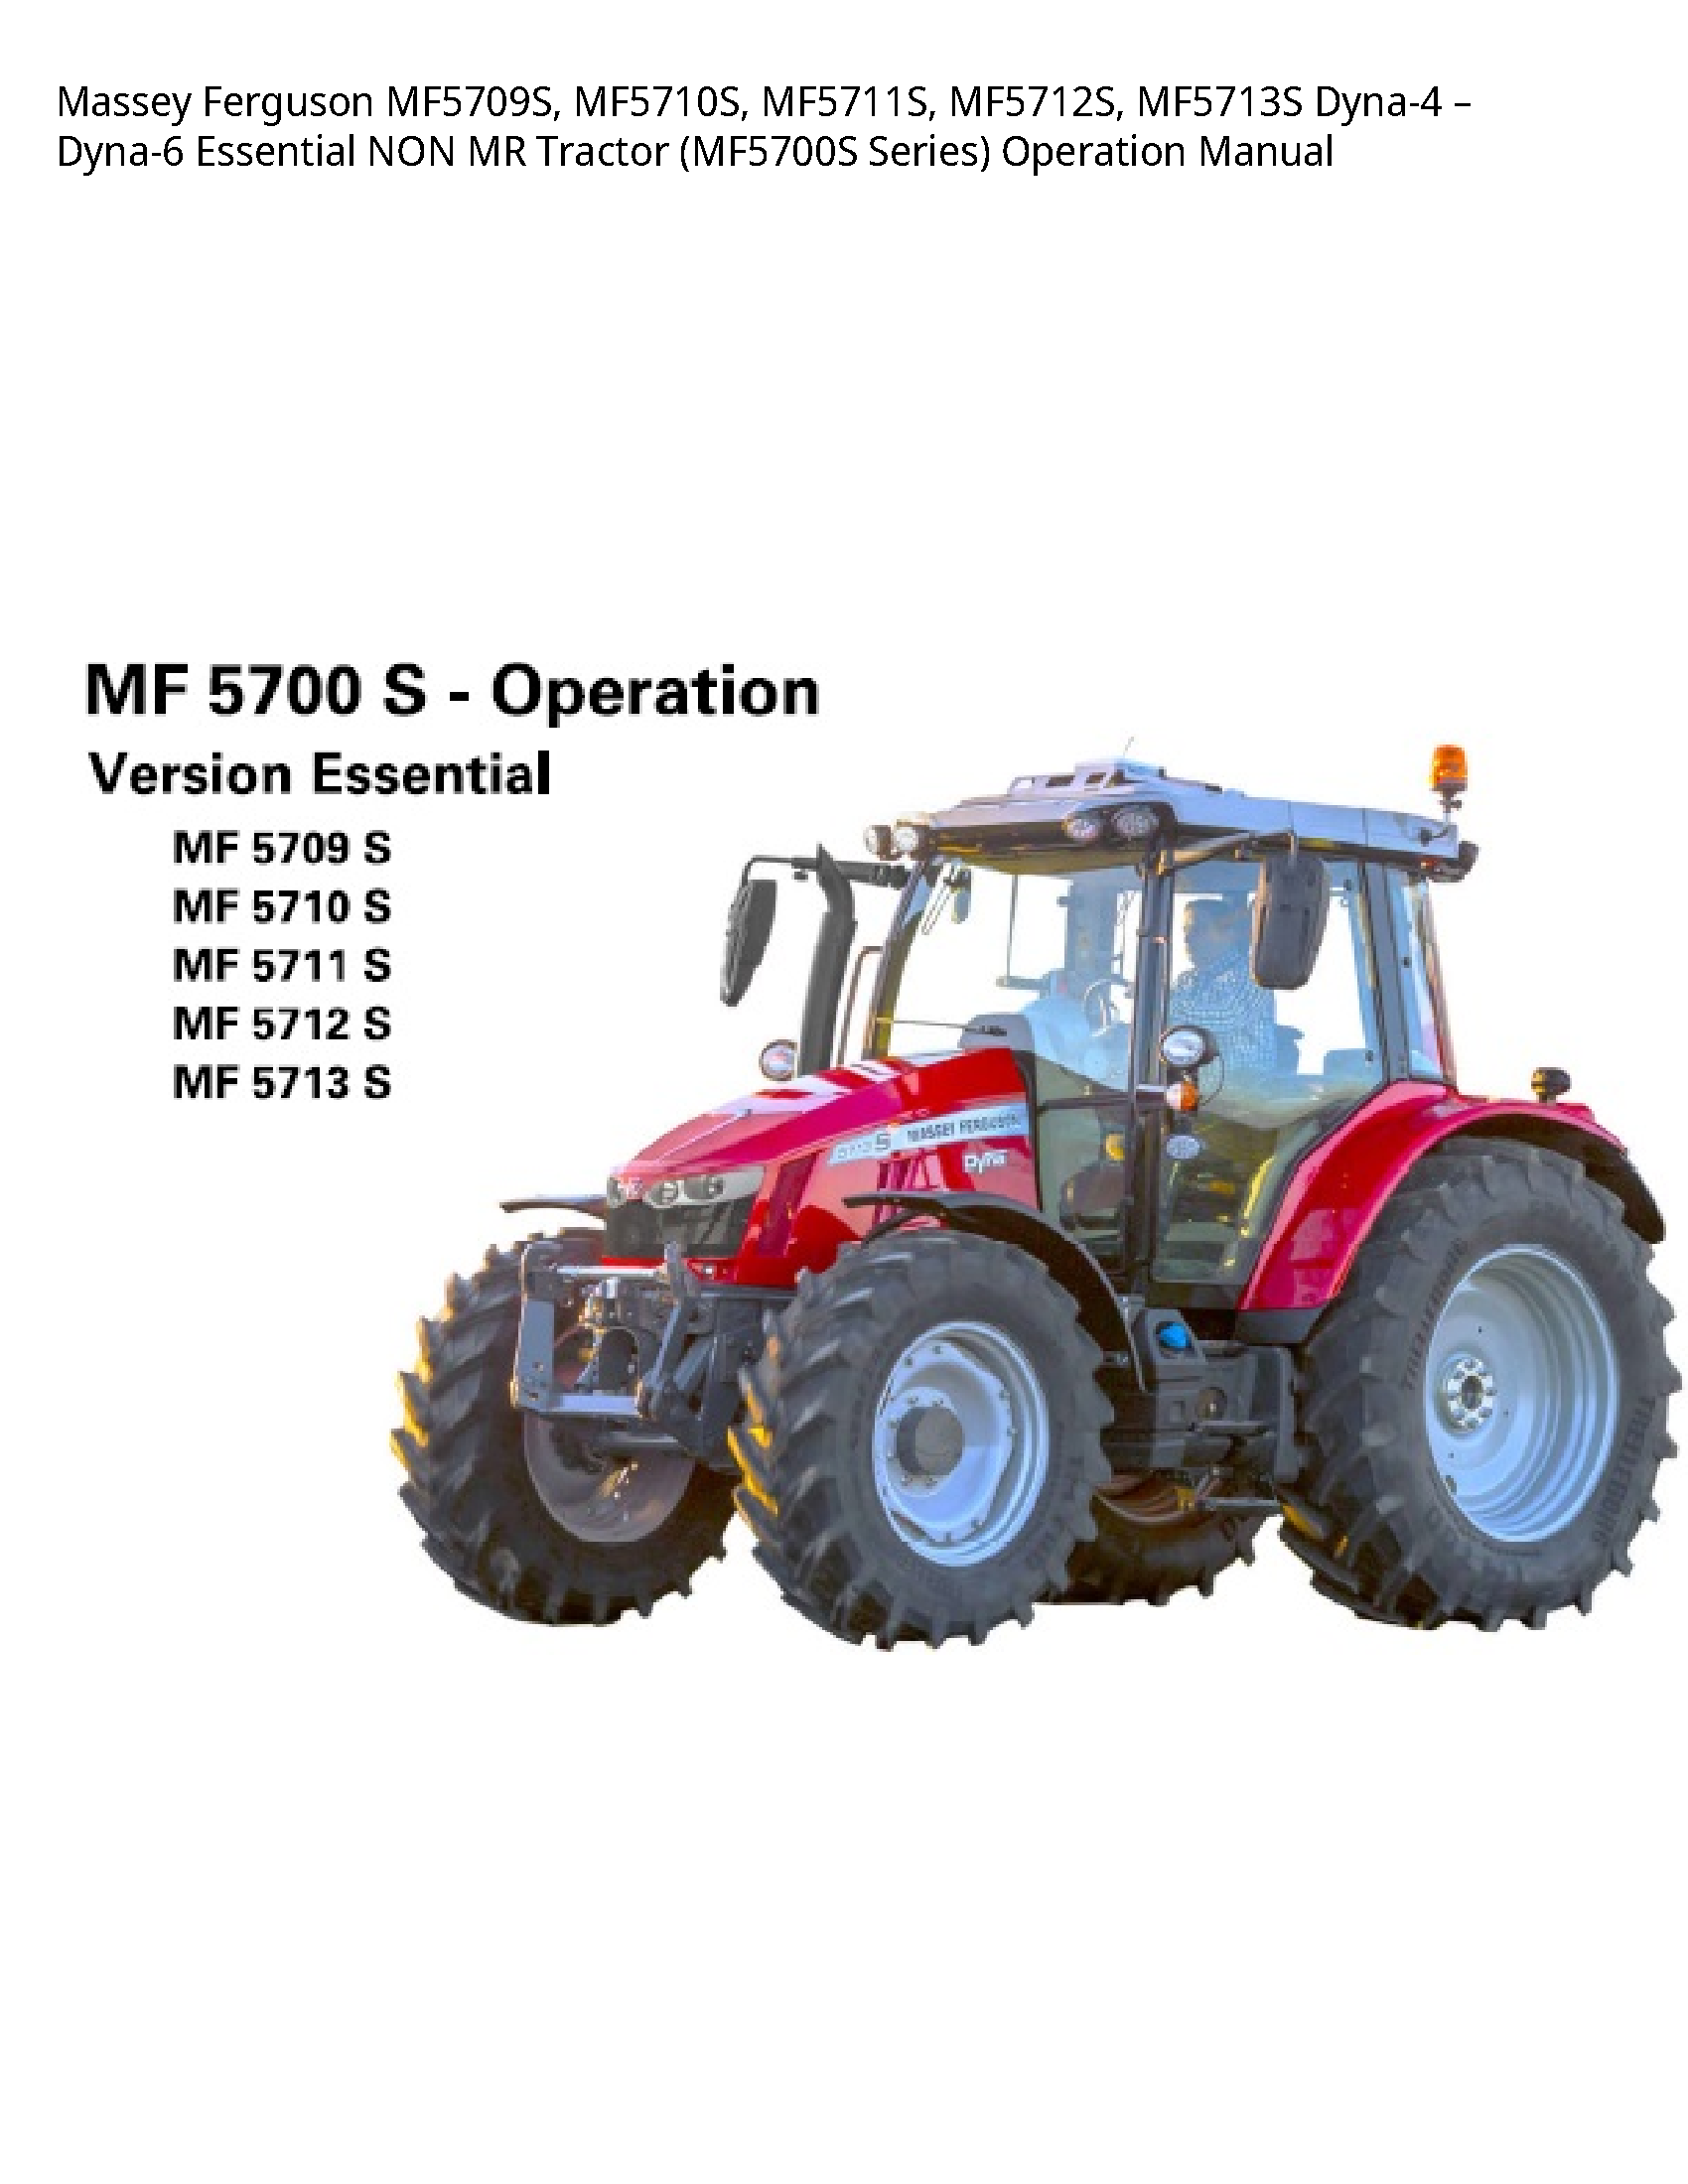 Massey Ferguson MF5709S Essential NON MR Tractor Series) Operation manual